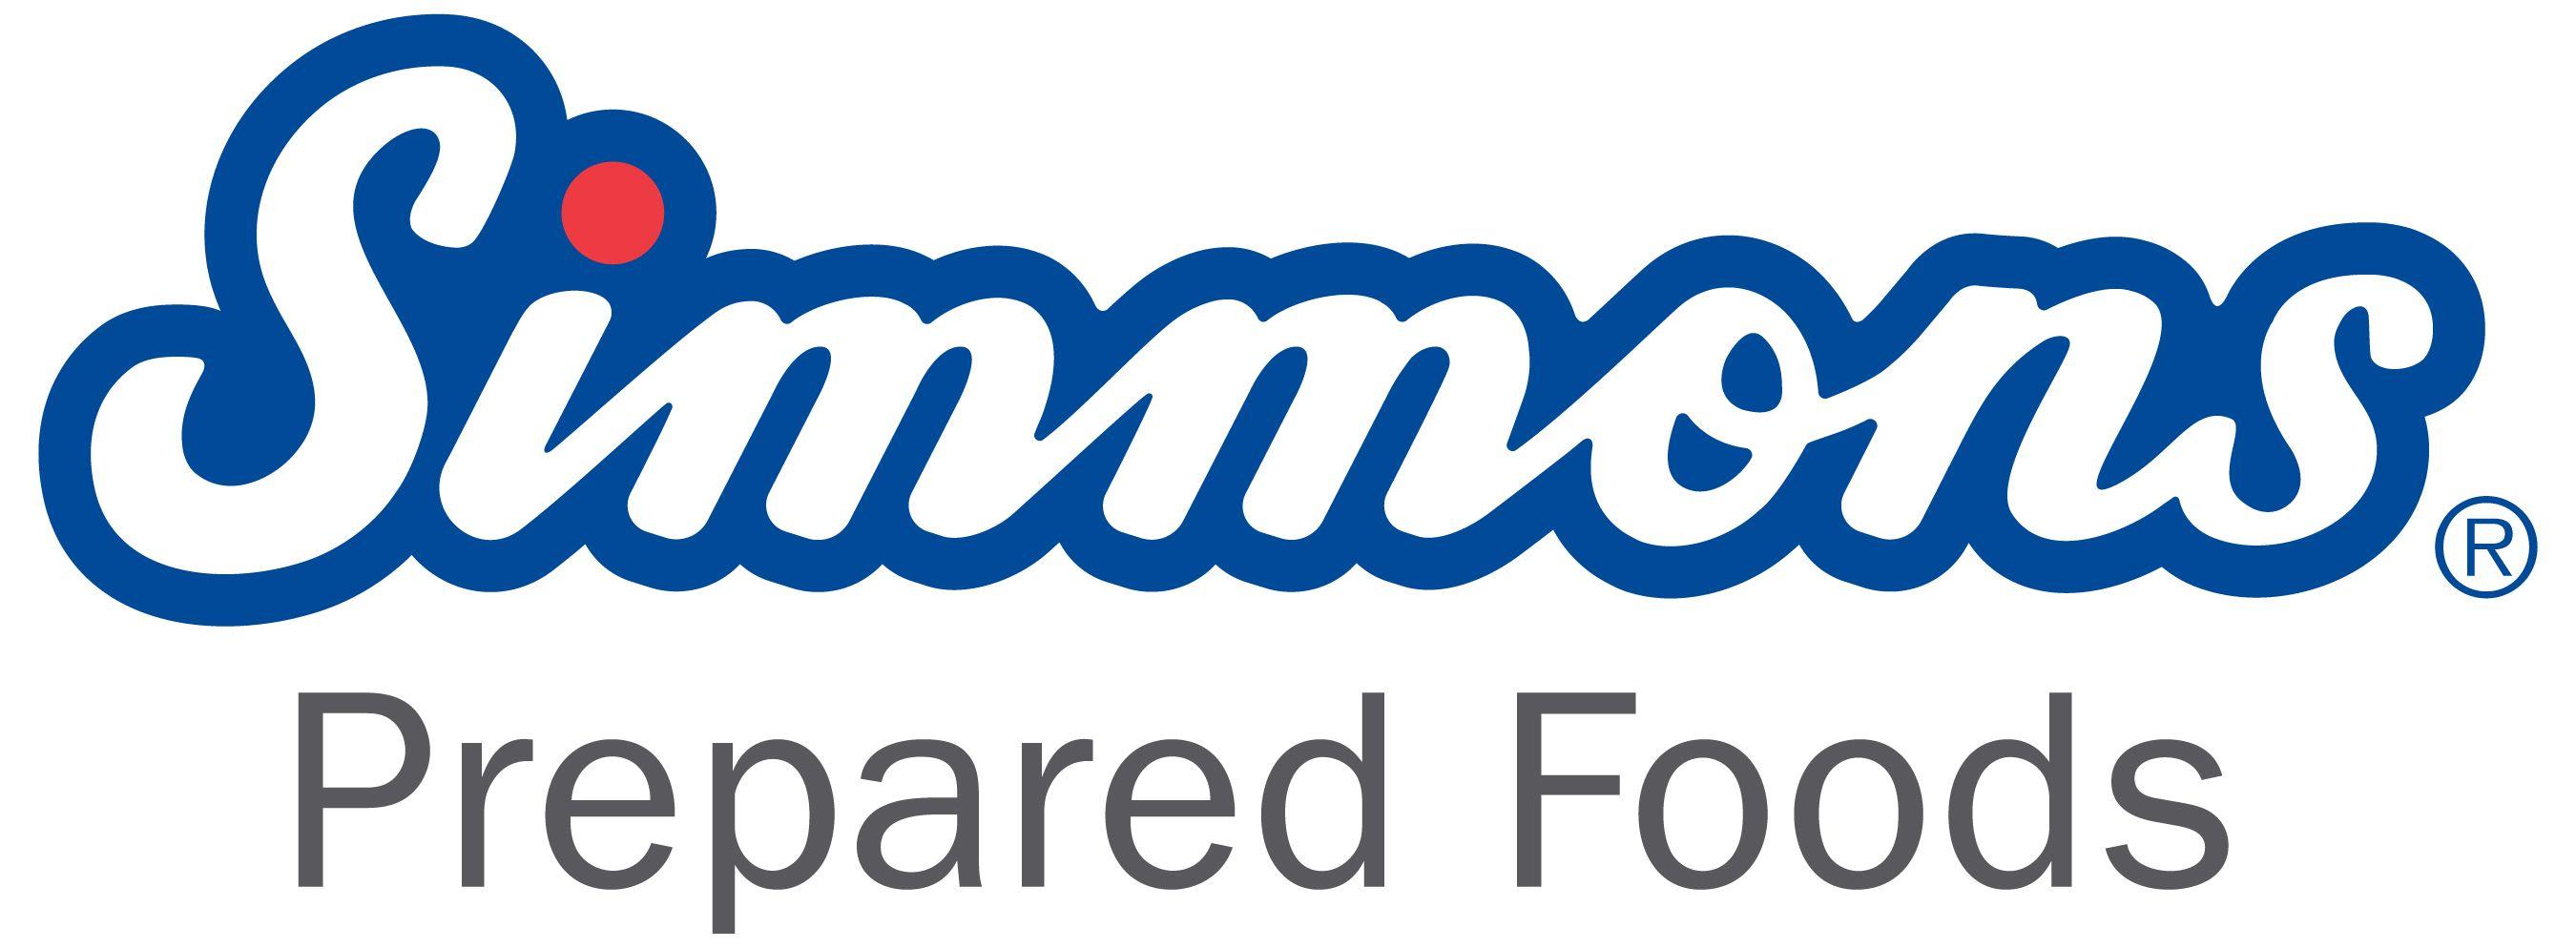 Blue Oval Food Logo - Simmons Branding — Simmons Foods